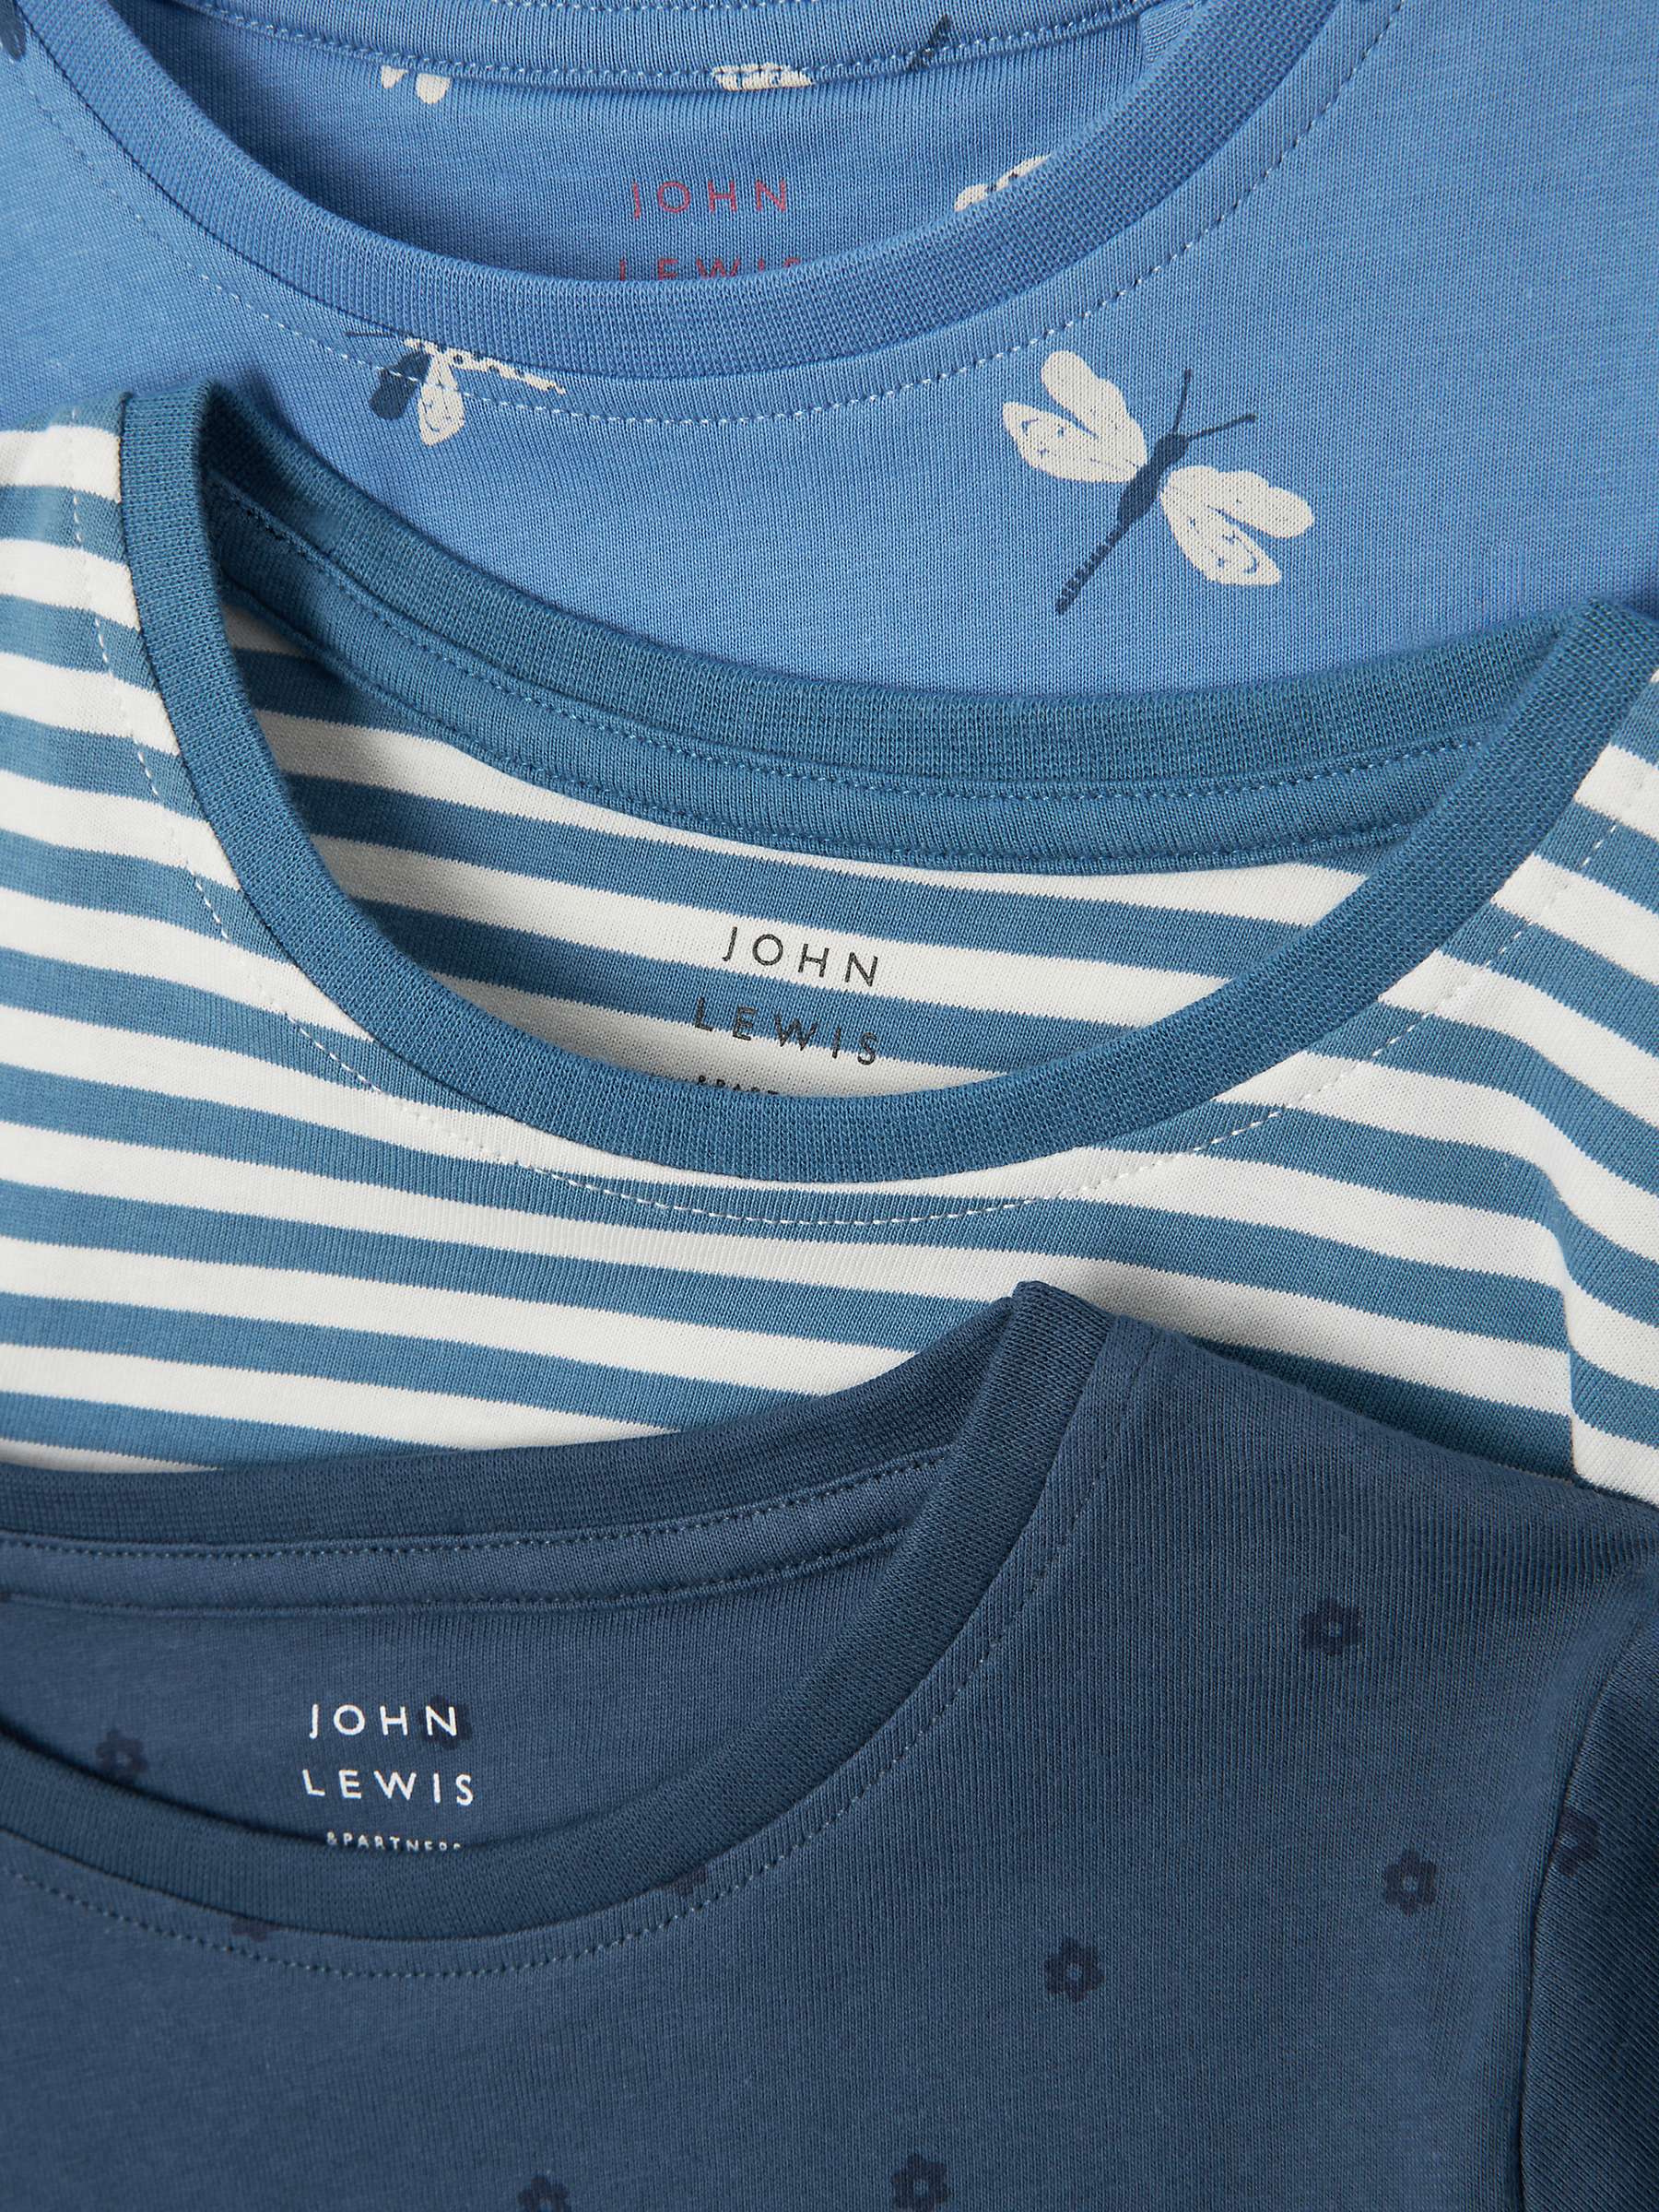 Buy John Lewis Kids' Dragonfly/Stripe/Flower Long Sleeve T-Shirts, Pack of 3, Blue/Multi Online at johnlewis.com